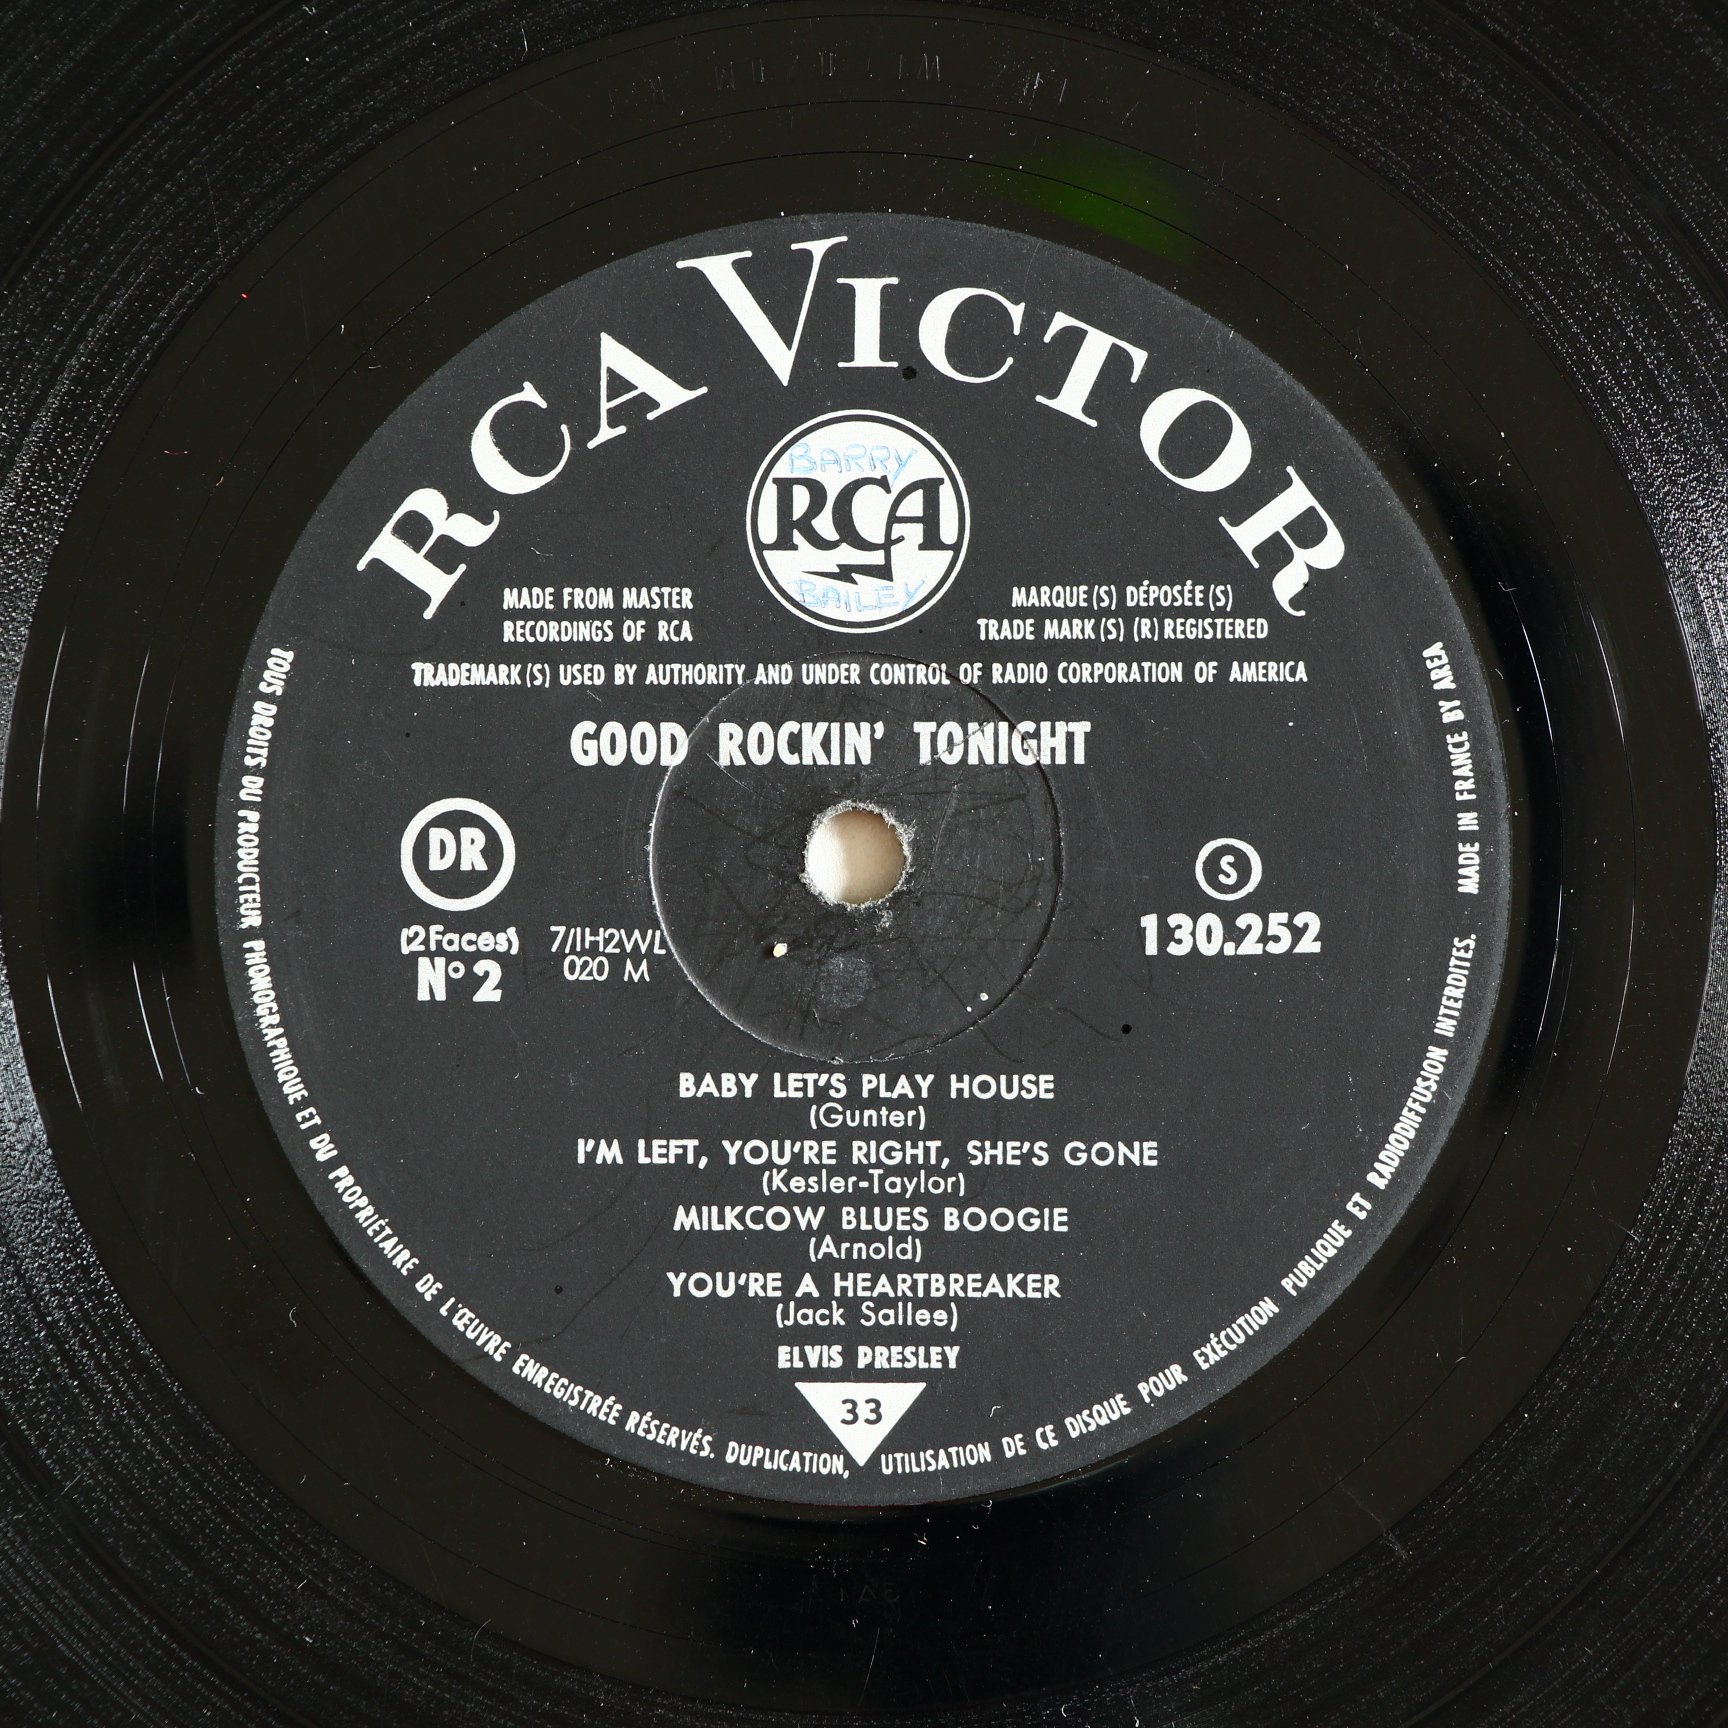 Elvis Presley Rare French 10 inch vinyl record "Good Rockin Tonight" original pressing 130.252. - Image 3 of 6